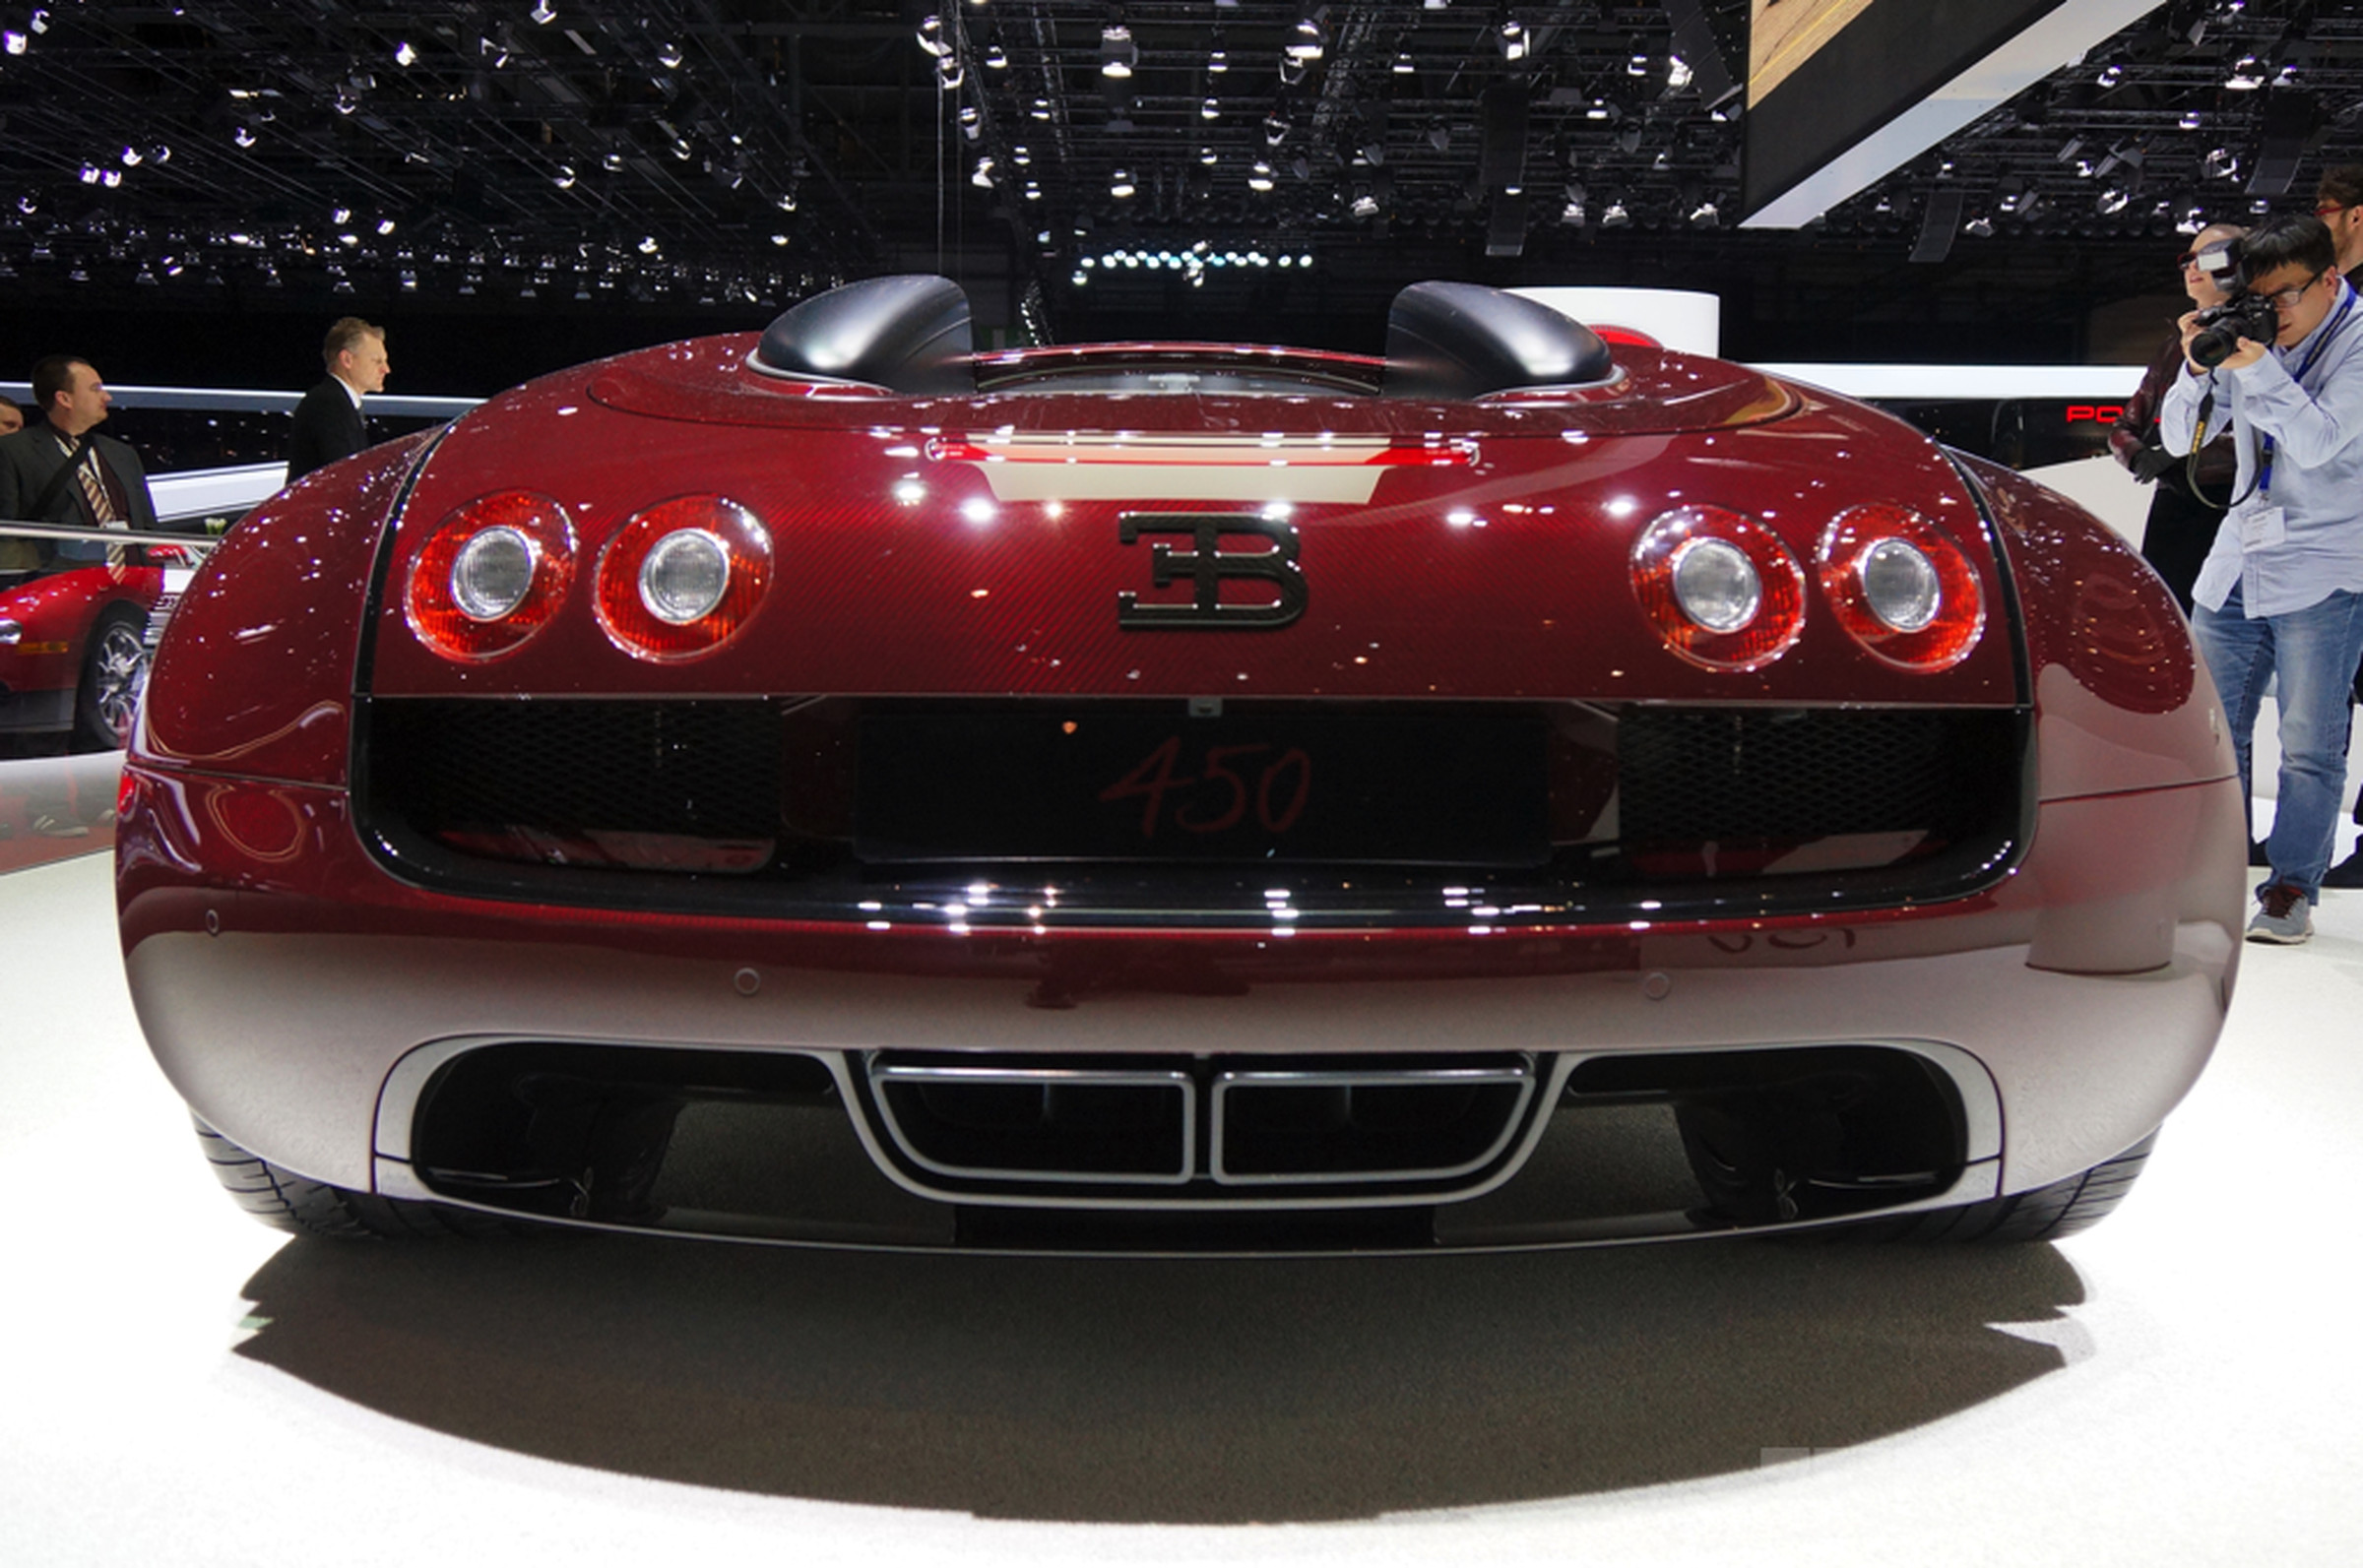 Bugatti Veyron at Geneva Motor Show 2015